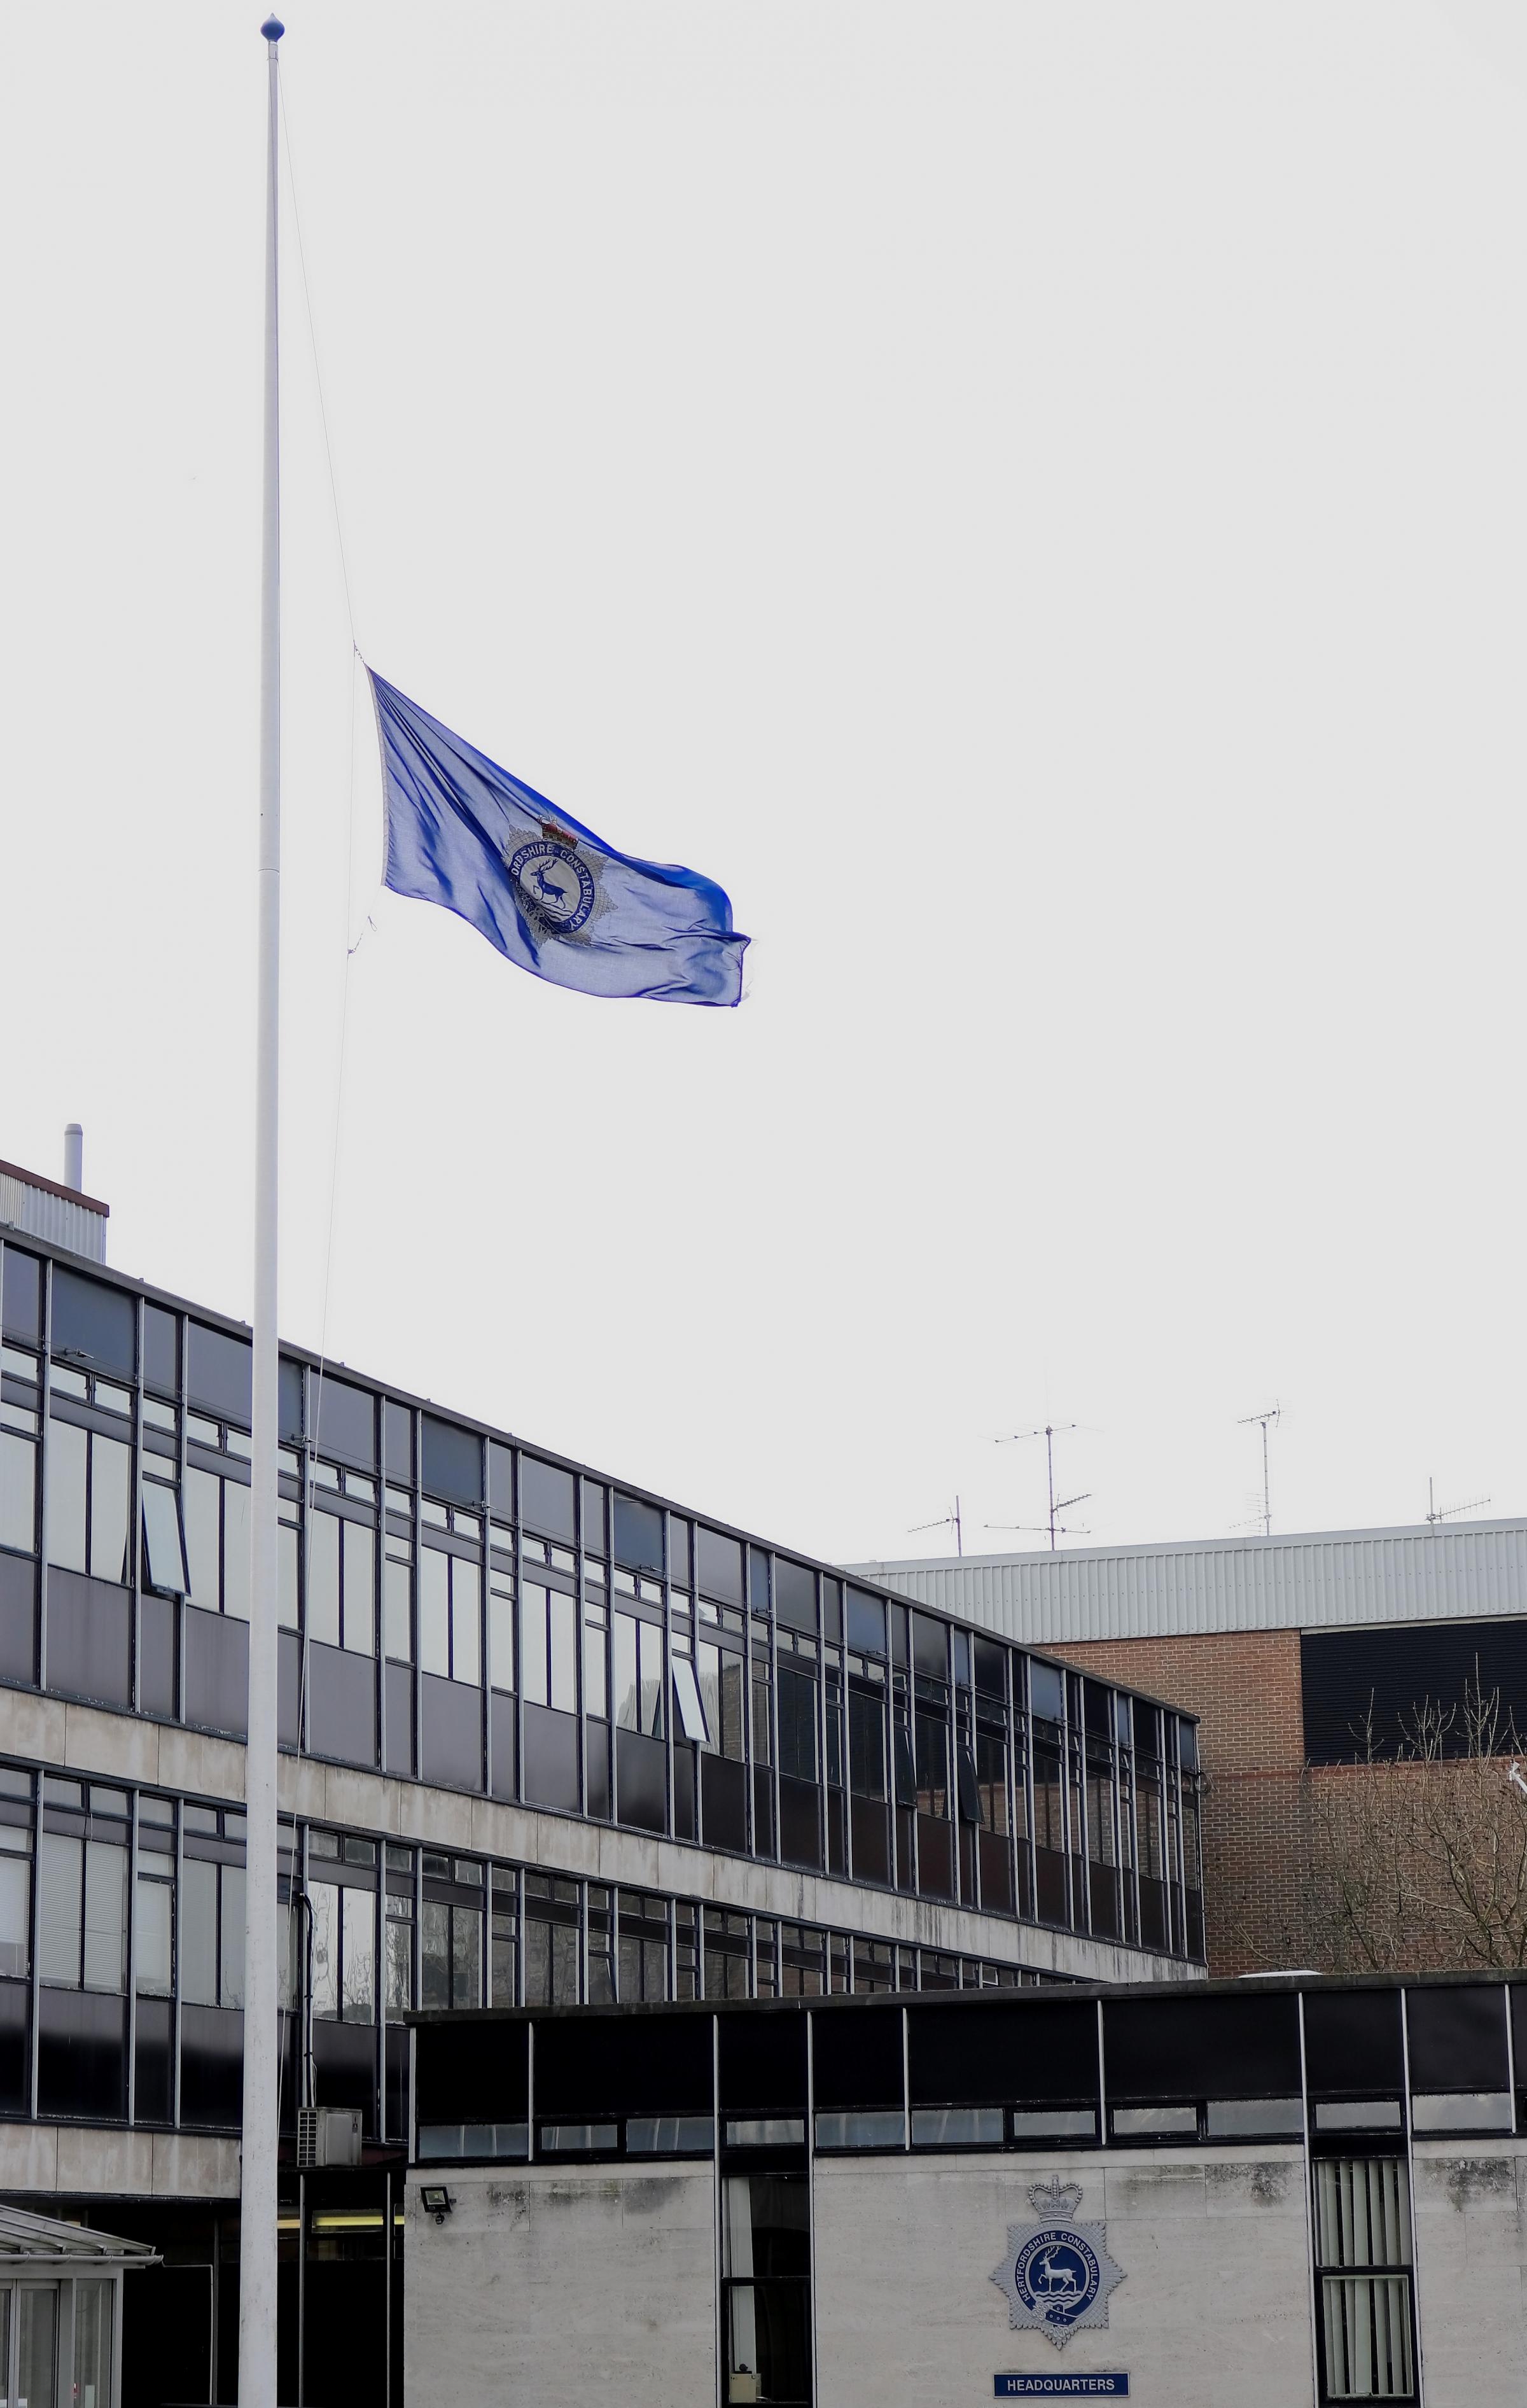 Flag flies at half mast in honour of murdered police officer